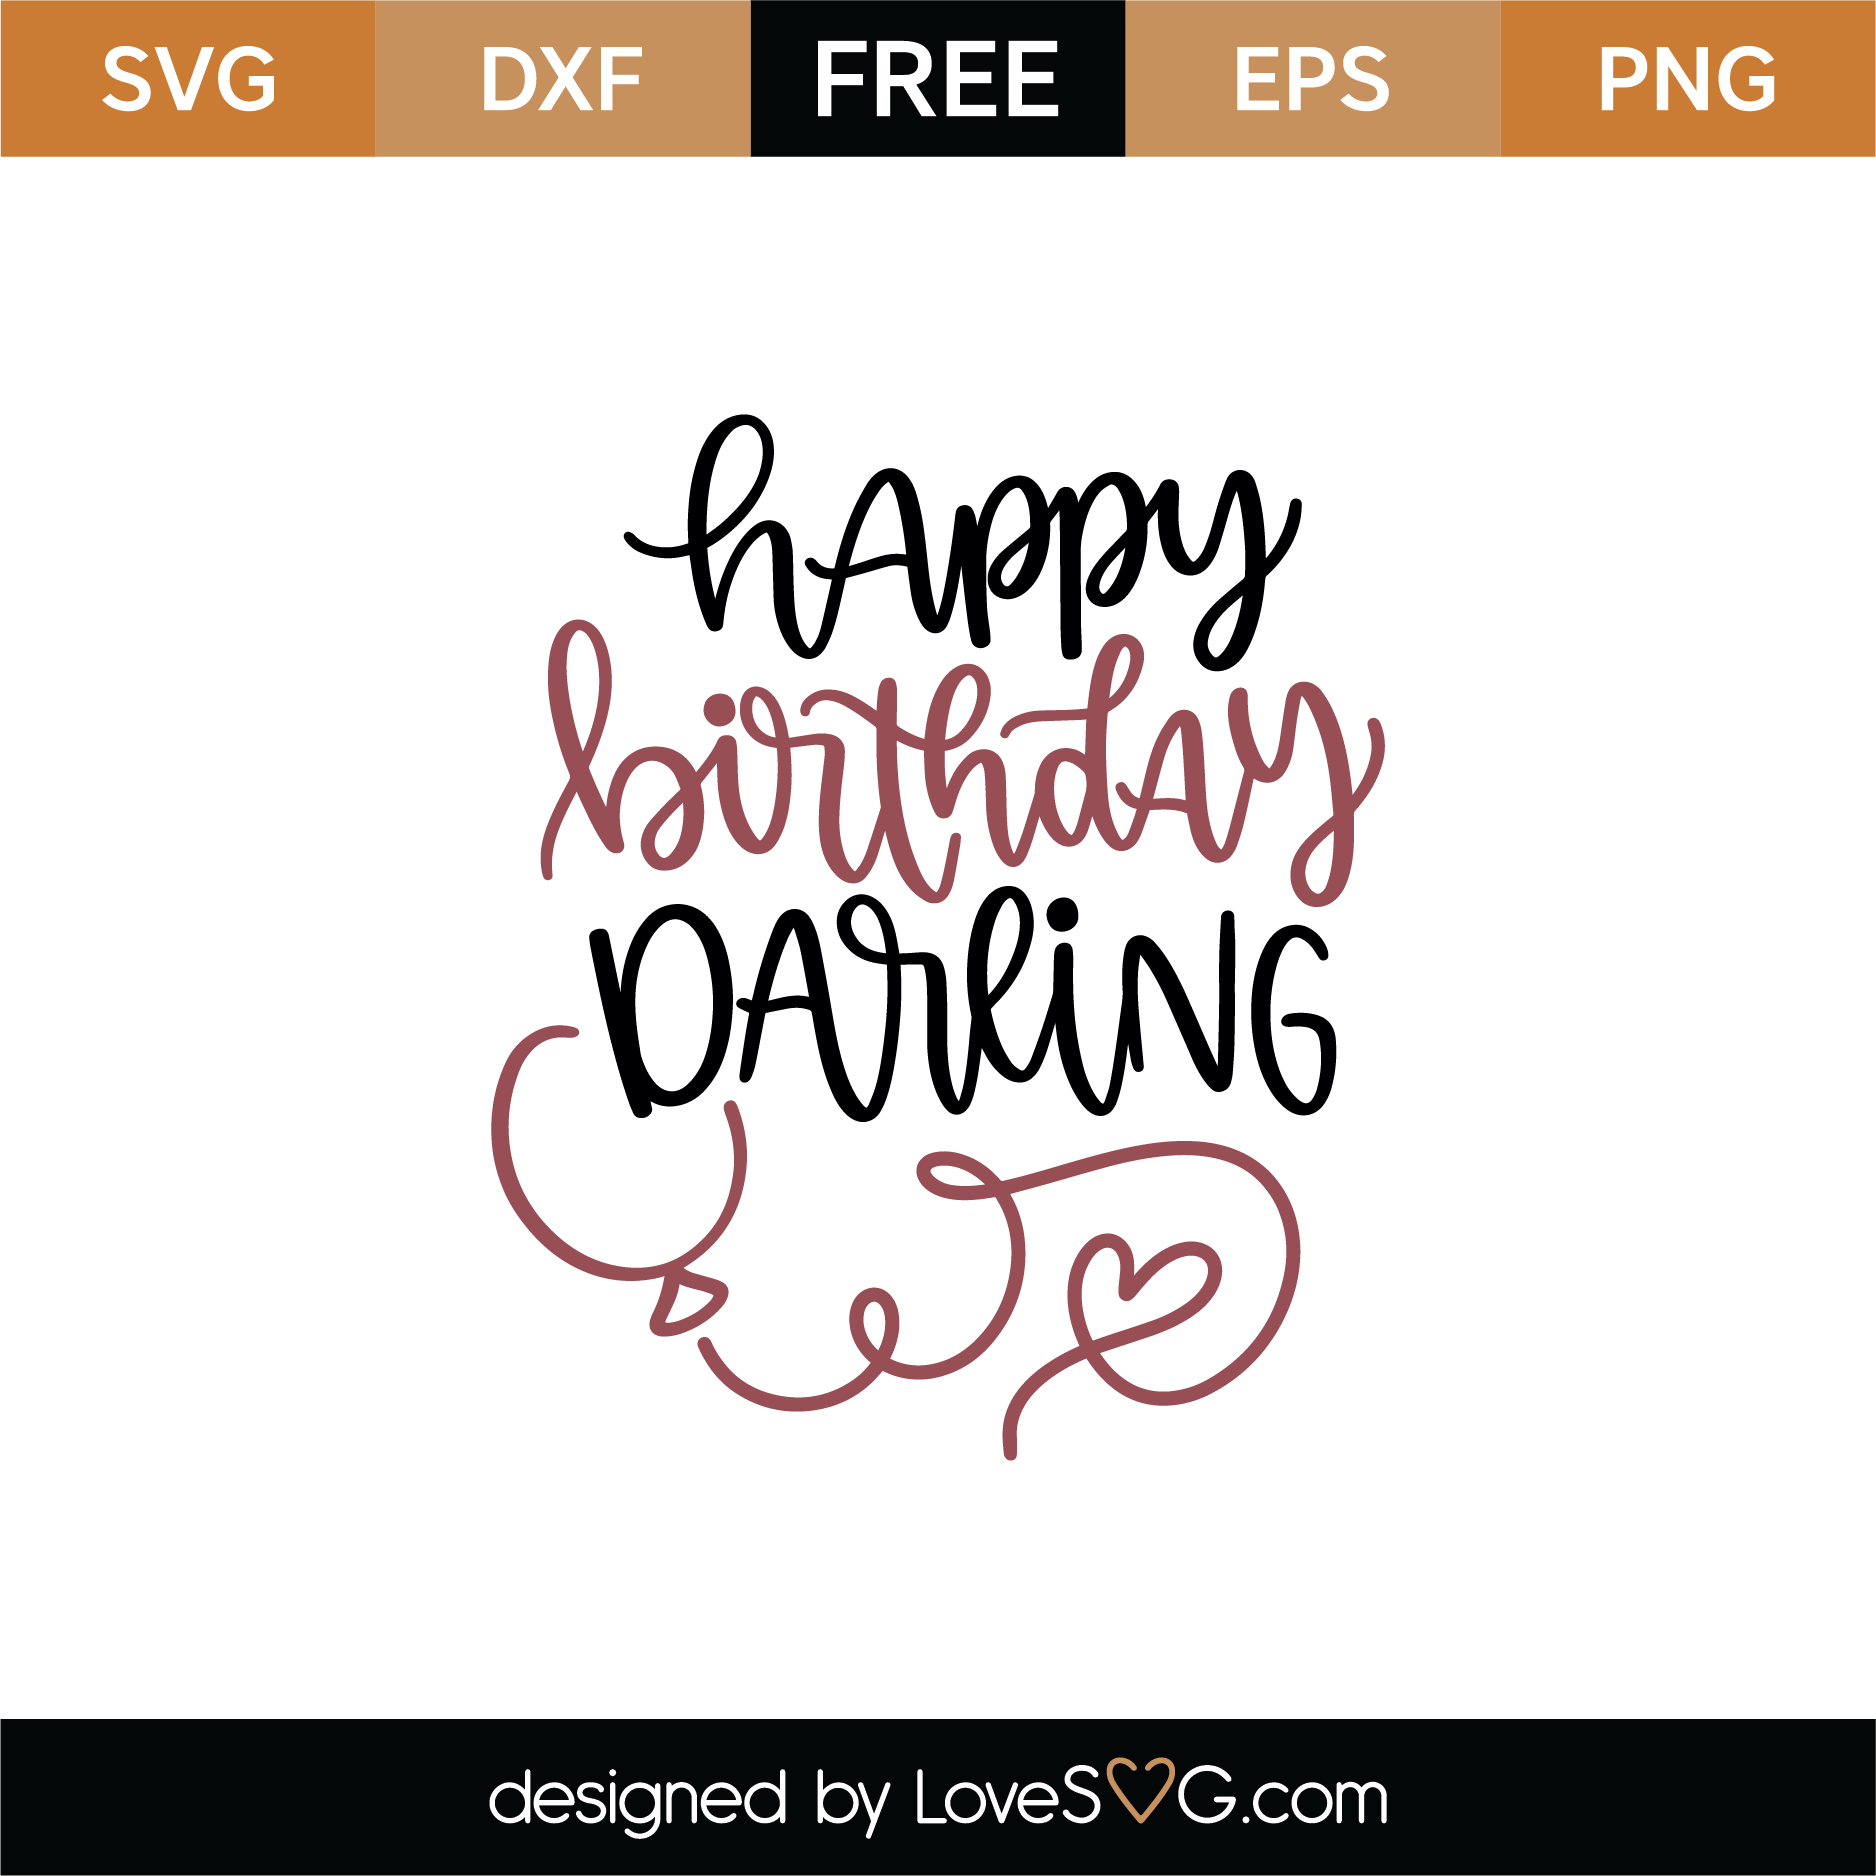 Free Happy Birthday Darling SVG Cut File | Lovesvg.com